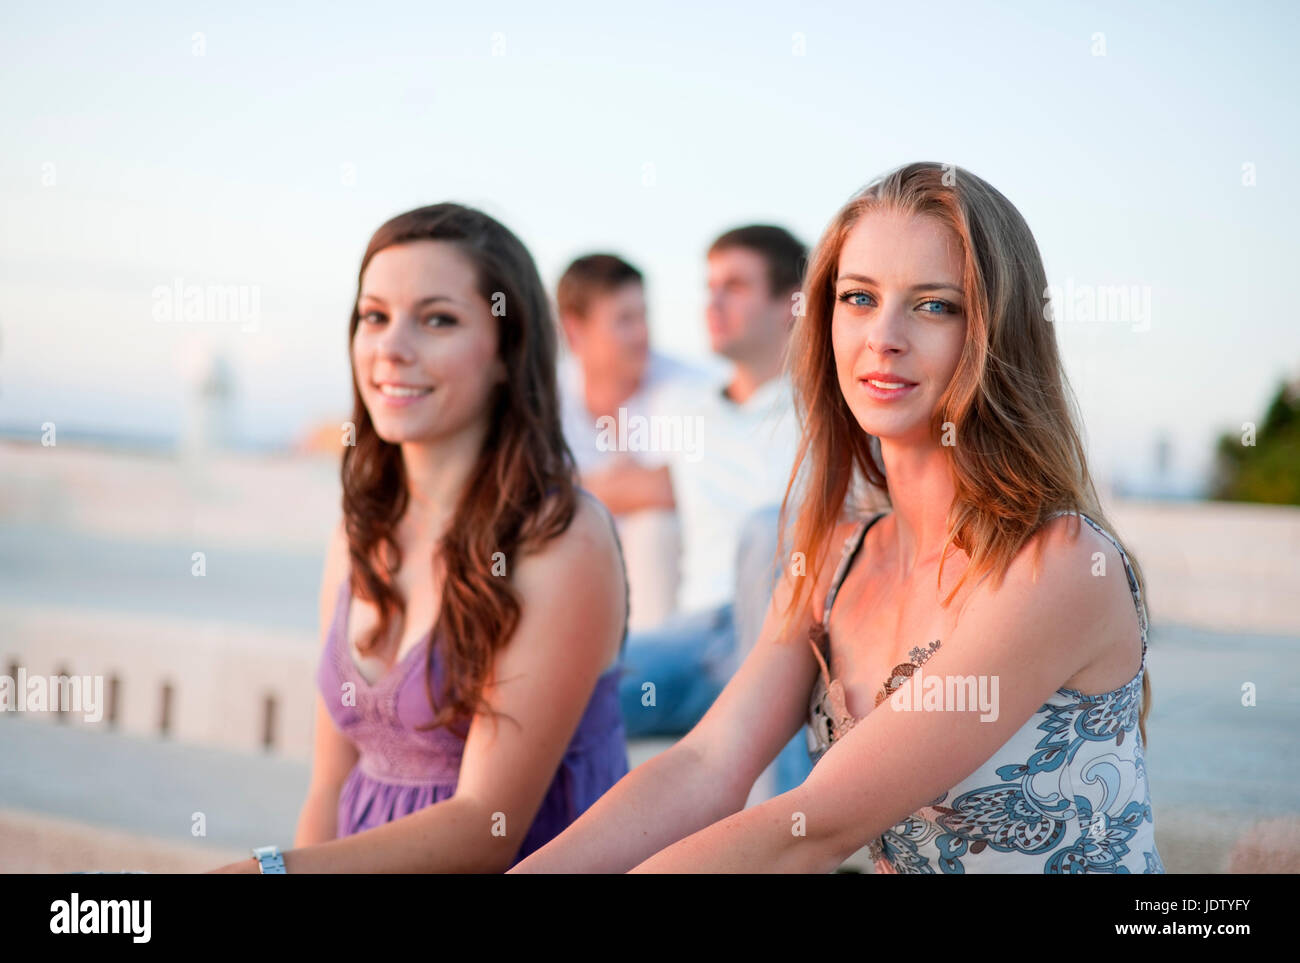 Women sitting on pier outdoors Stock Photo